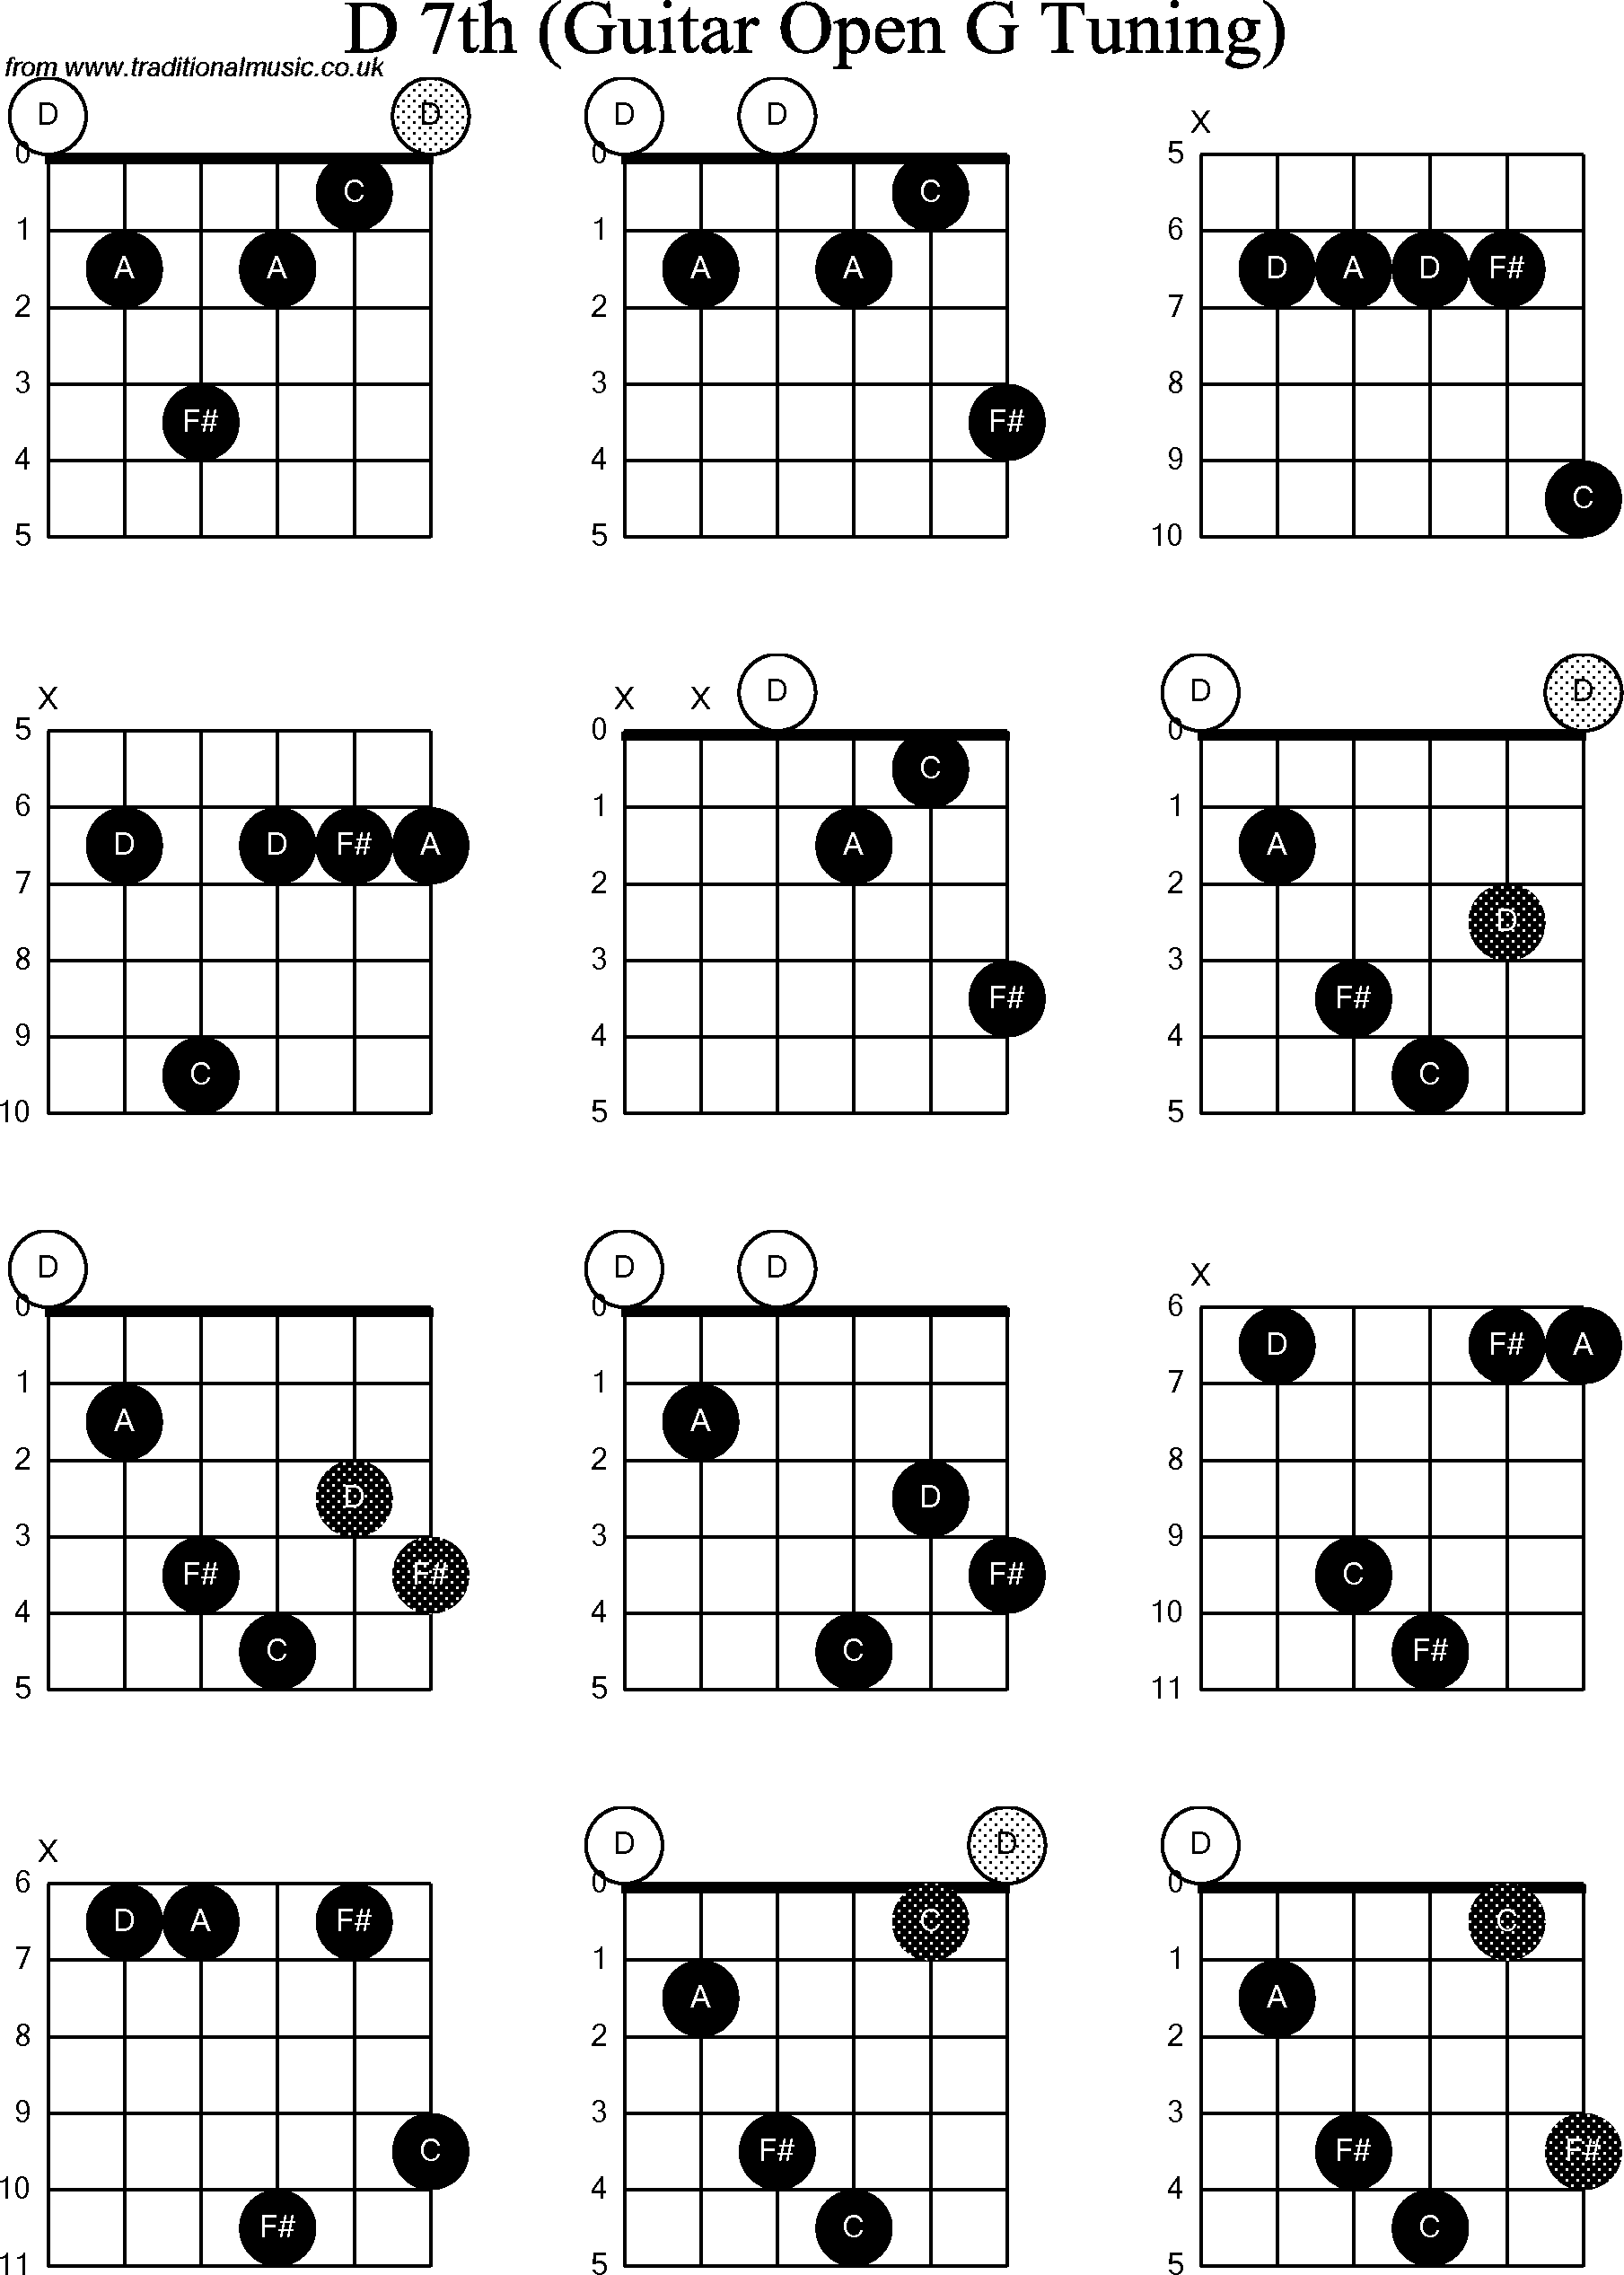 Chord diagrams for Dobro D7th